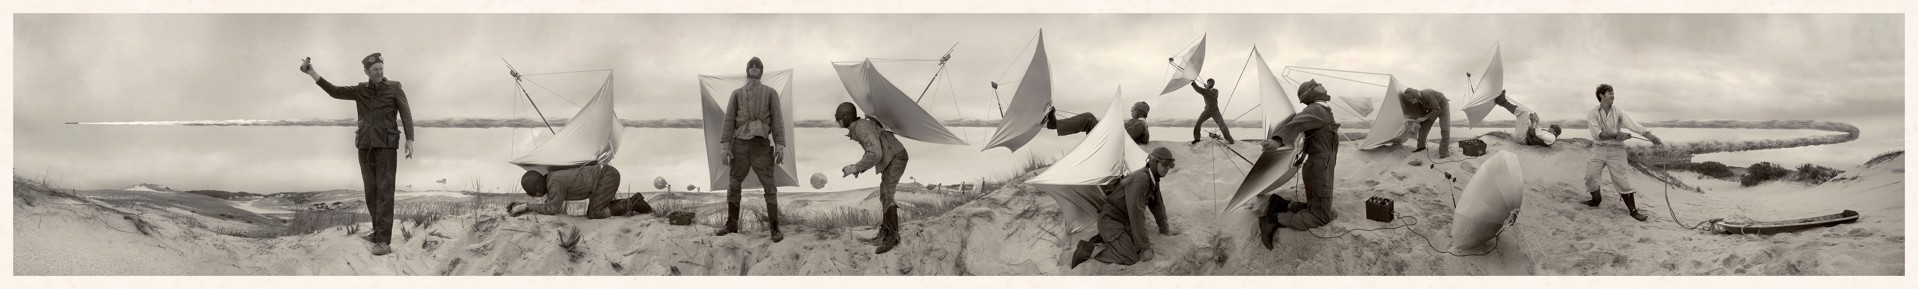 Crash Landing (Radarmen) by Kahn & Selesnick